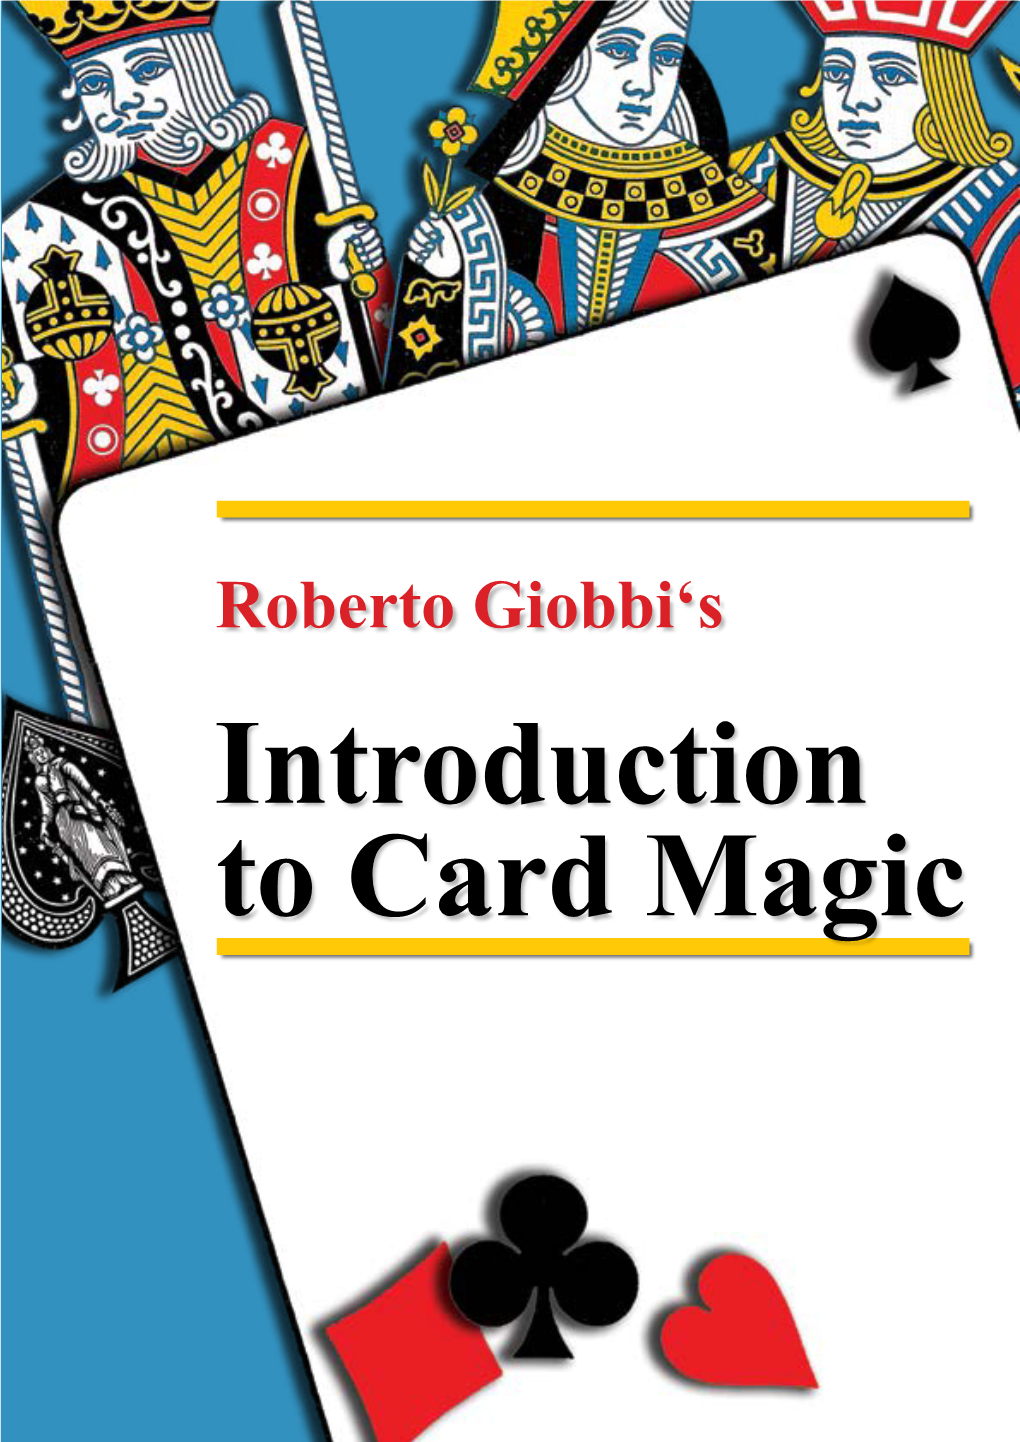 Roberto Giobbi's Introduction to Card Magic 3 ♦♣ Thanks!